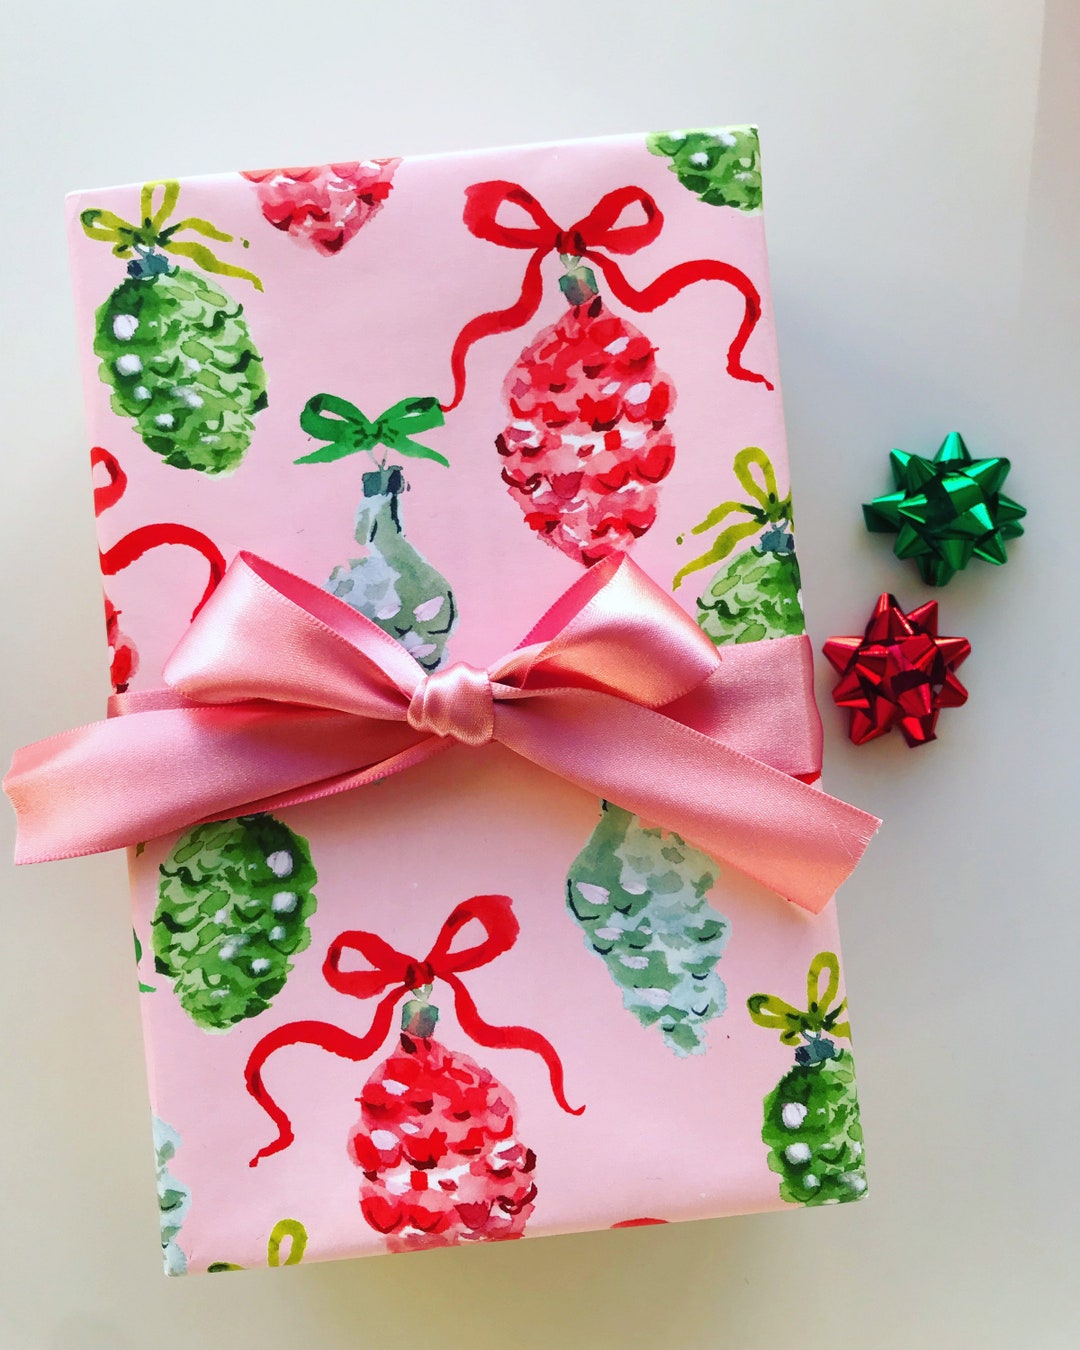 Vintage Winter Wonderland Printed Tissue Paper Gift Wrap Christmas Themed